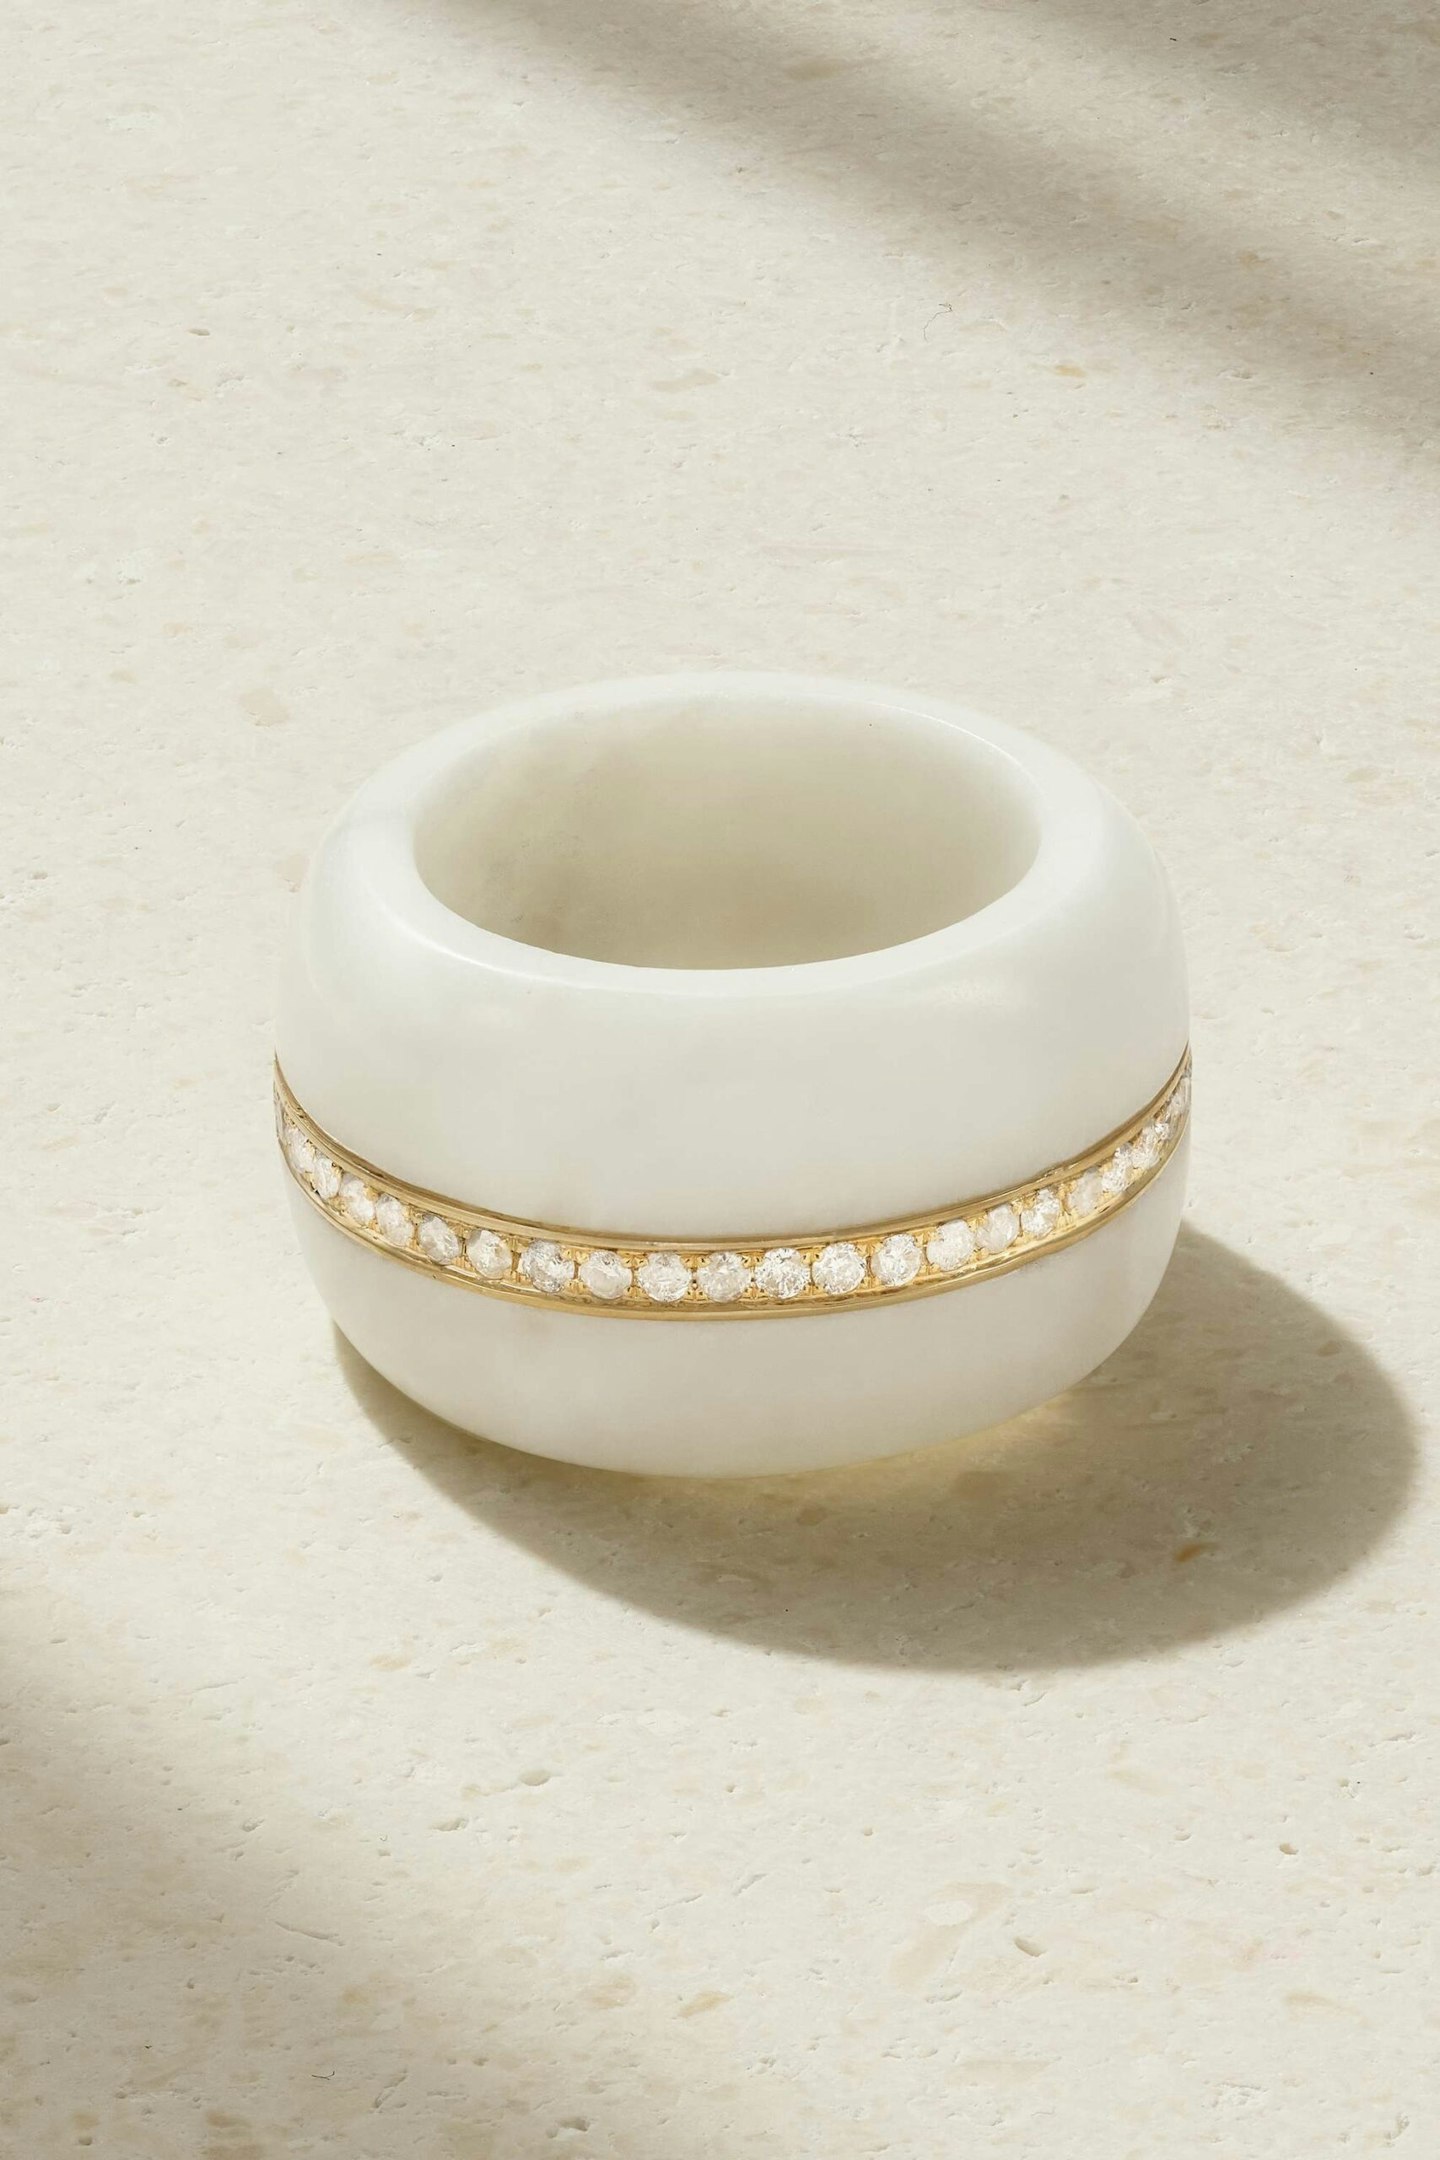 By Pariah, 14-Karat Gold, Marble And Diamond Ring